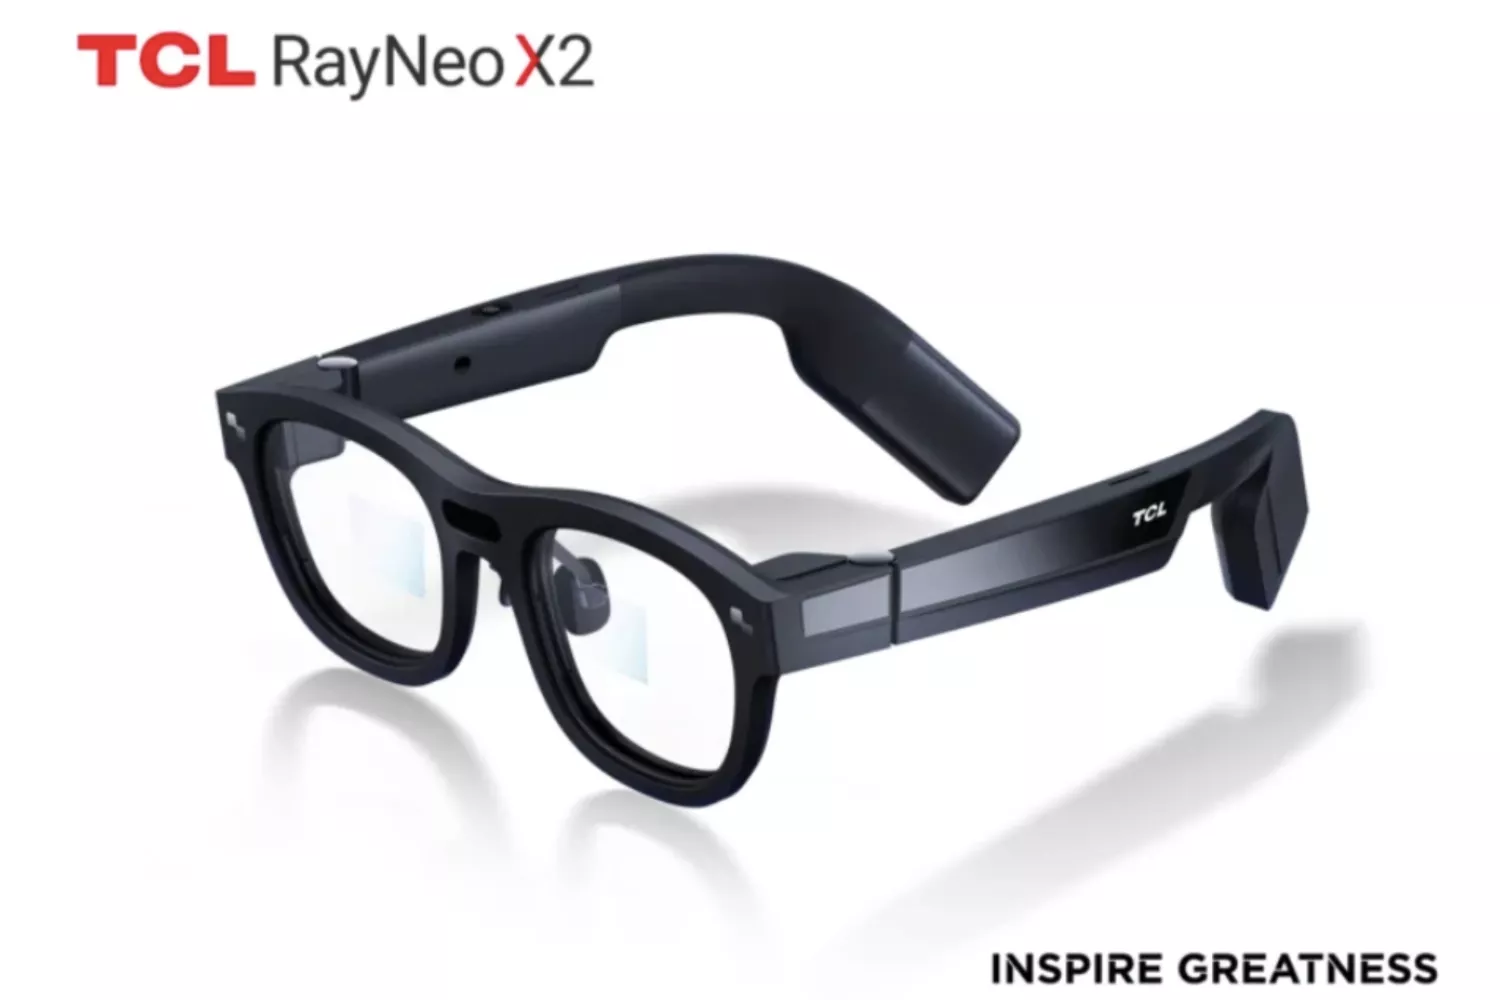 Gafas virtuales RayNeo X2 / TCL 